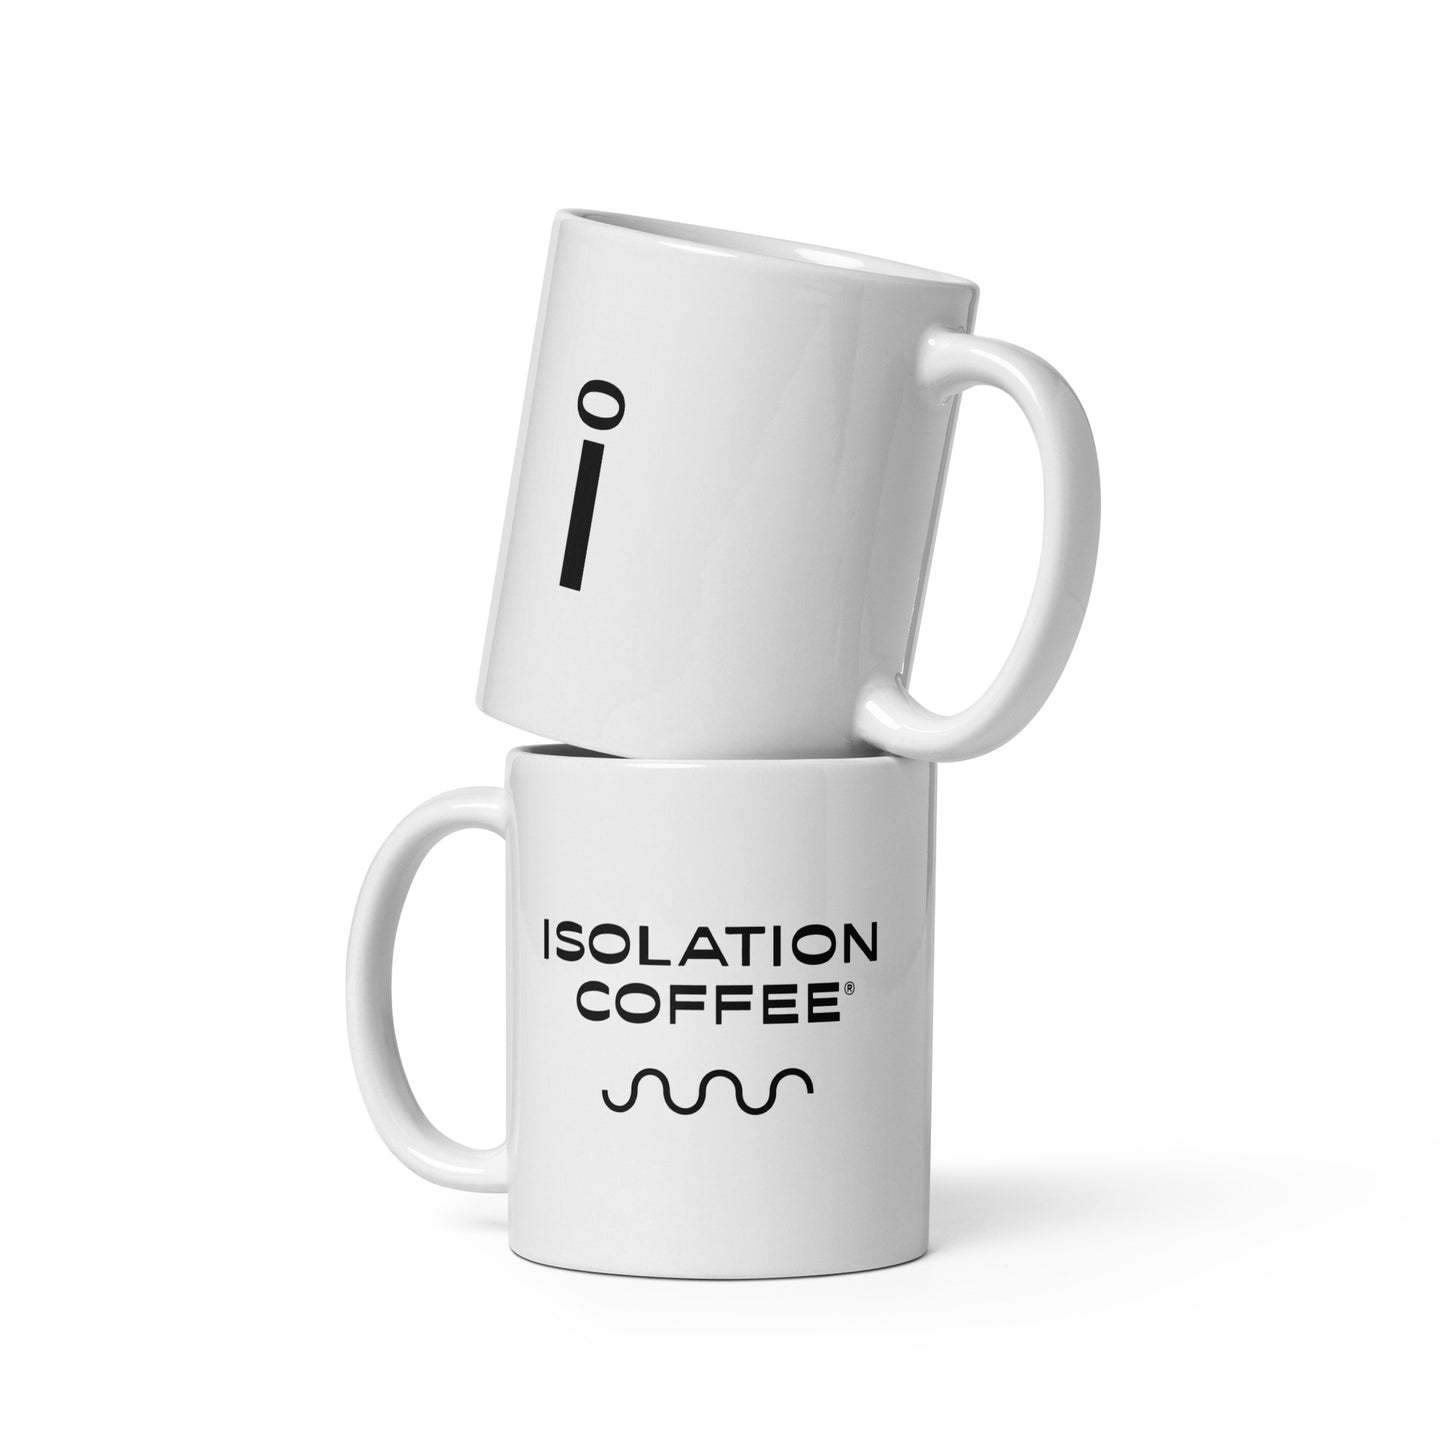 Isolation Coffee mug